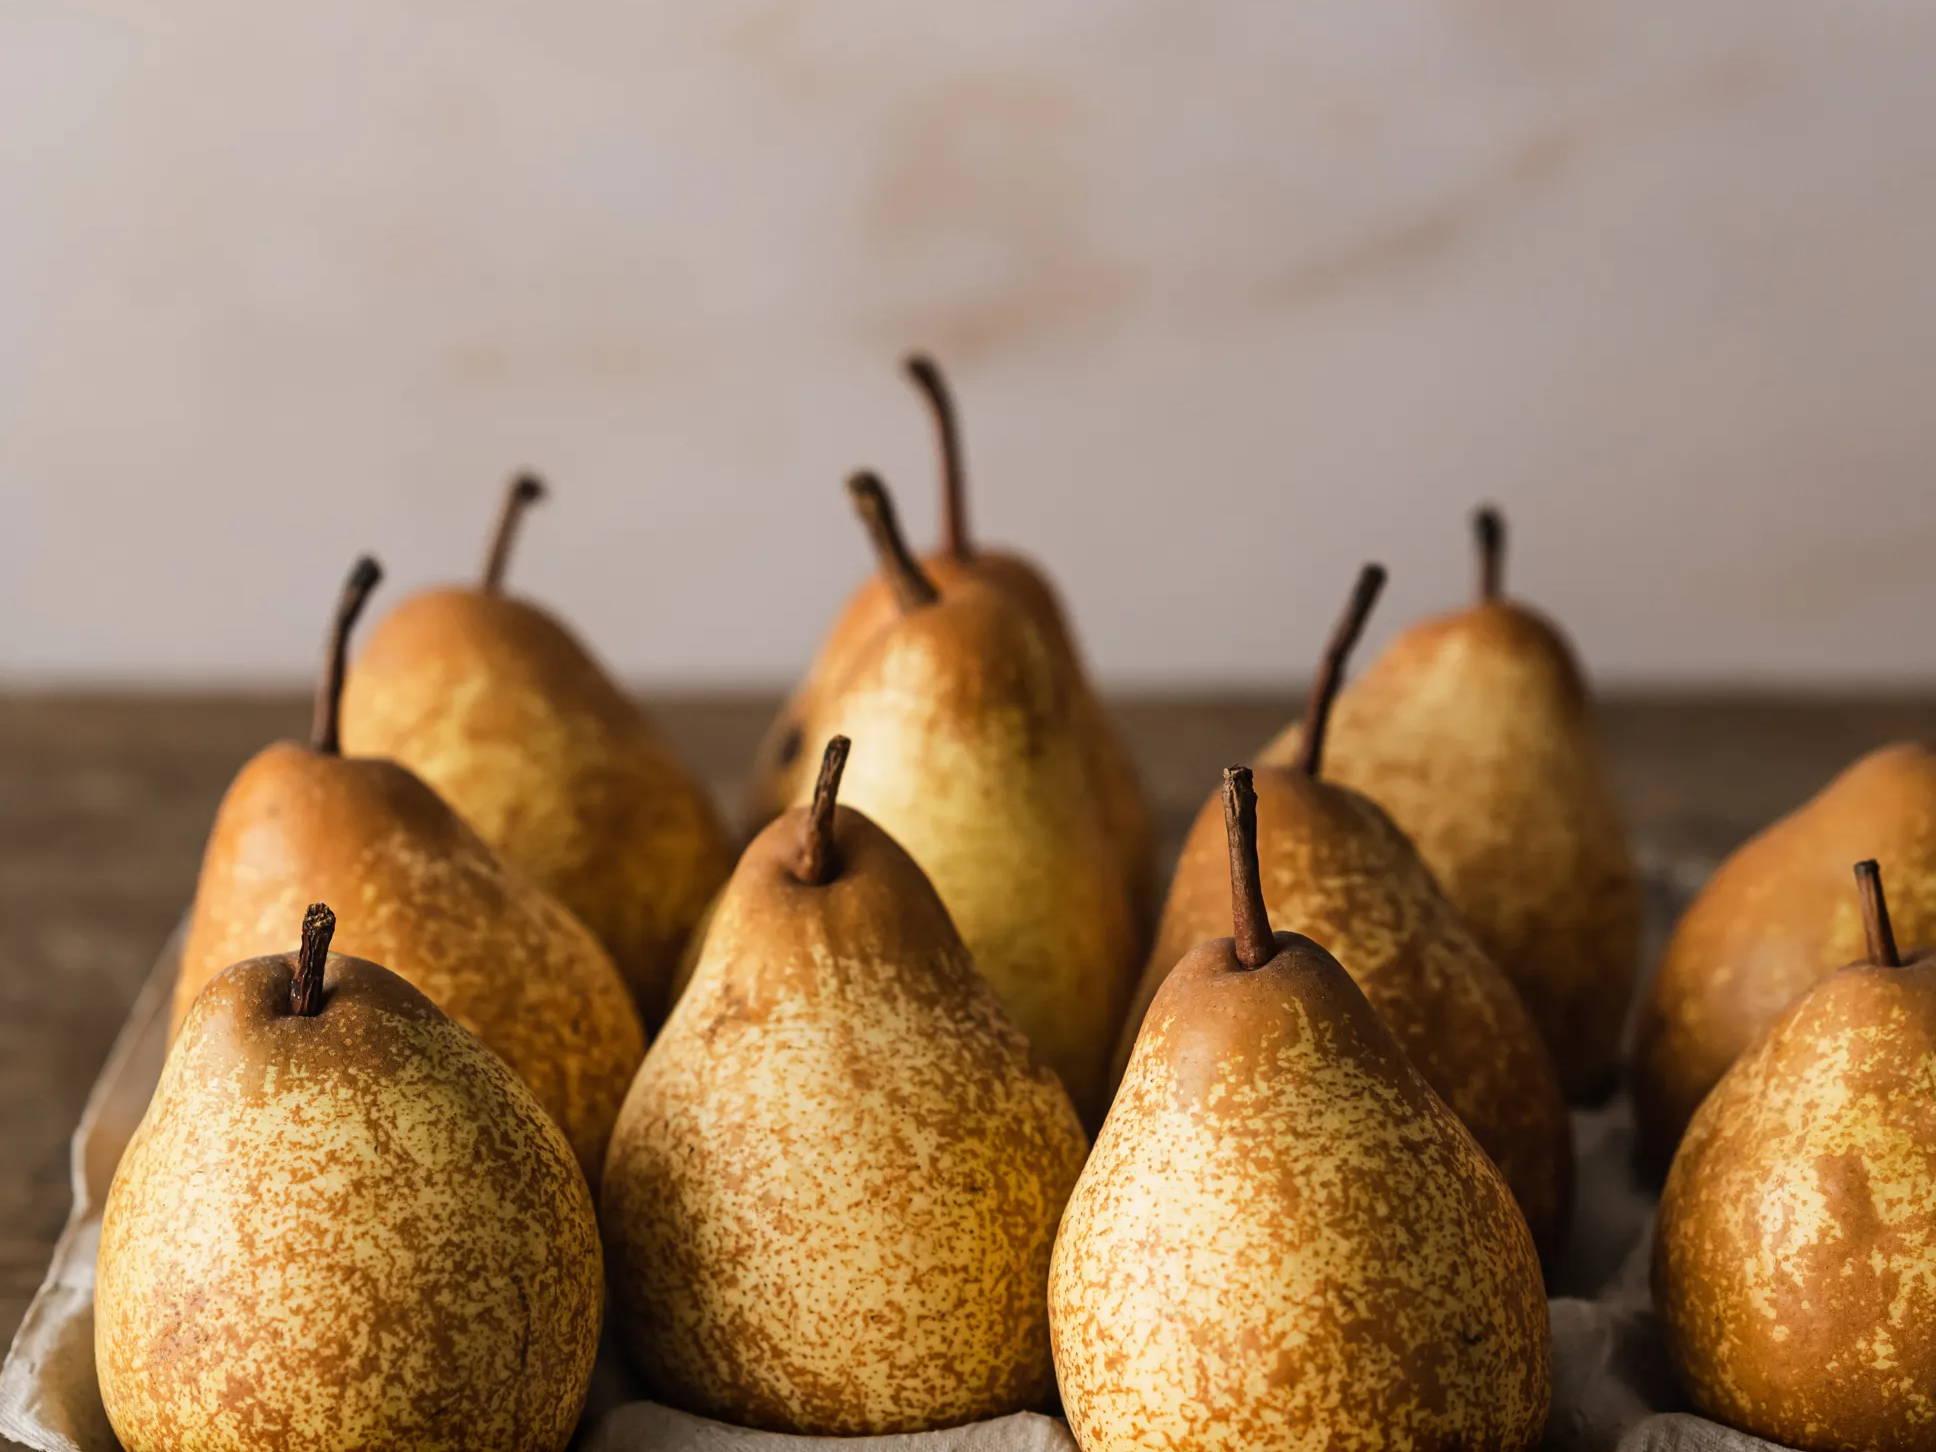 A carton of pears